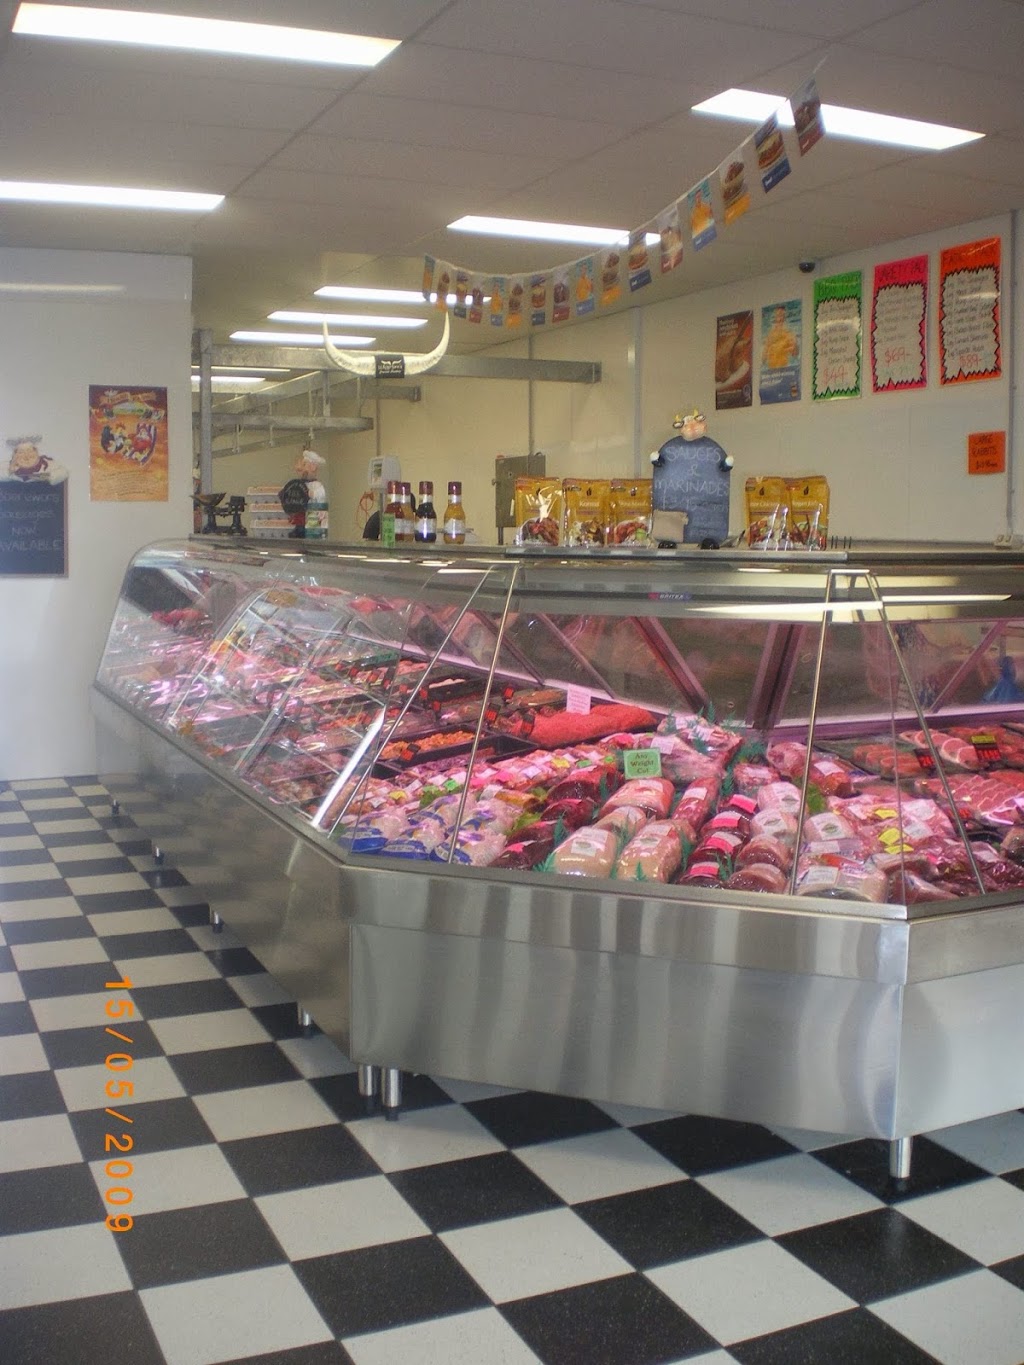 Whitehorns Gourmet Butchery | store | 3/106-126 Gap Rd, Sunbury VIC 3429, Australia | 0397405714 OR +61 3 9740 5714